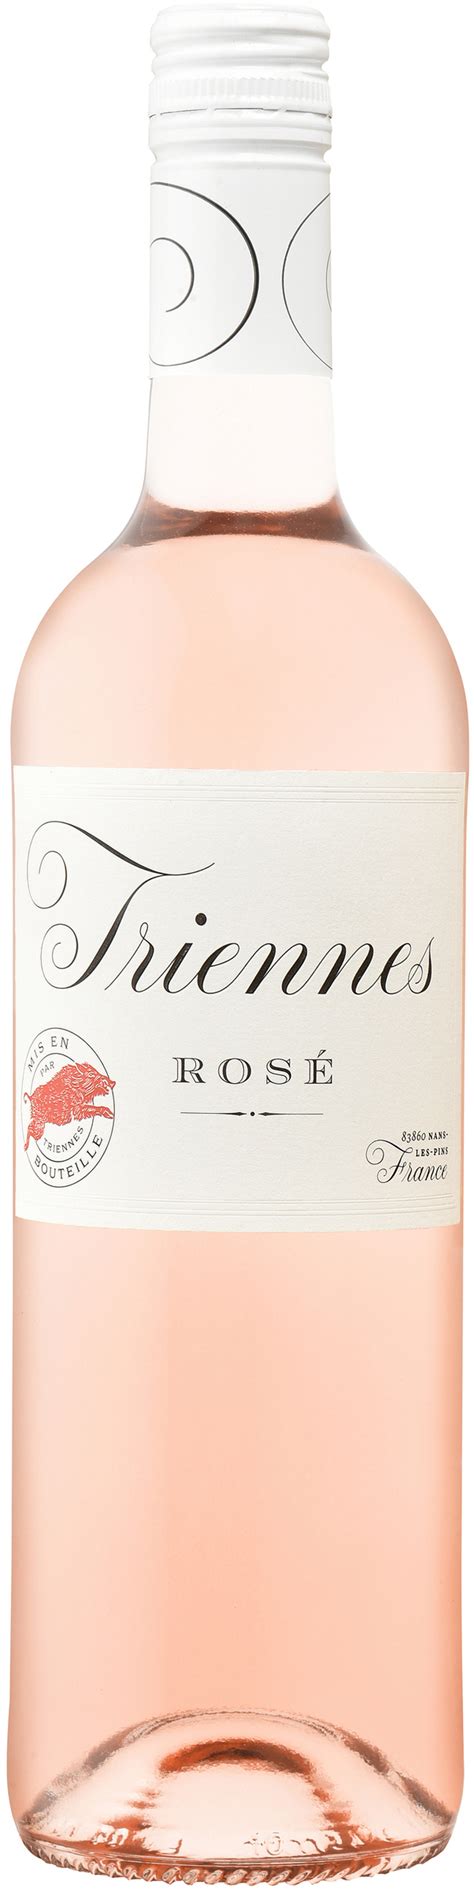 triennes rose ml  choice liquor market